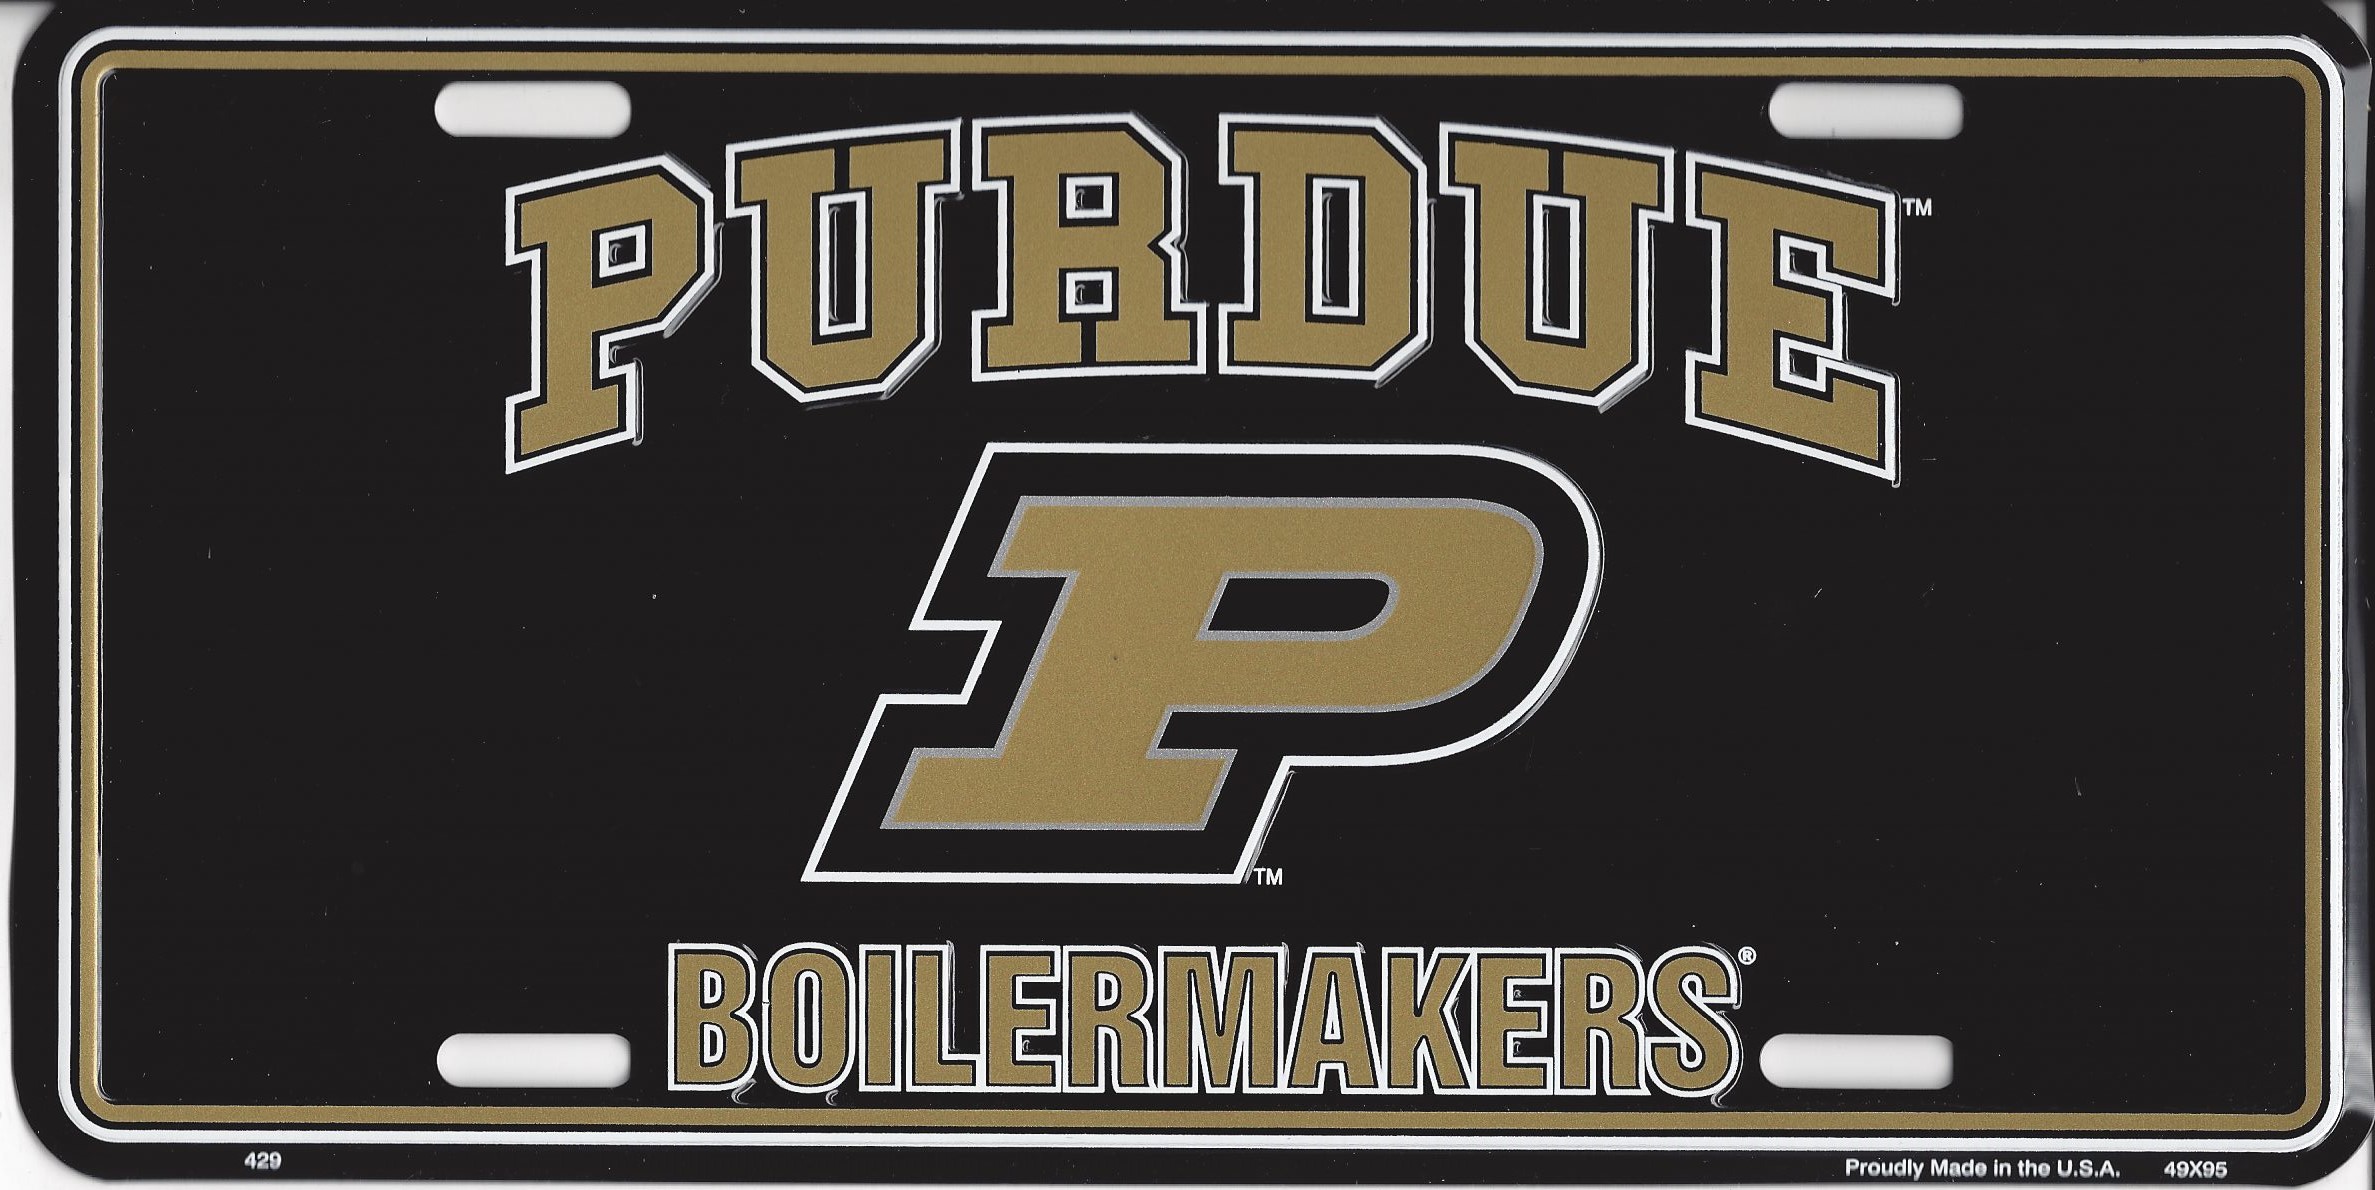 Purdue University Boilermakers LICENSE PLATE